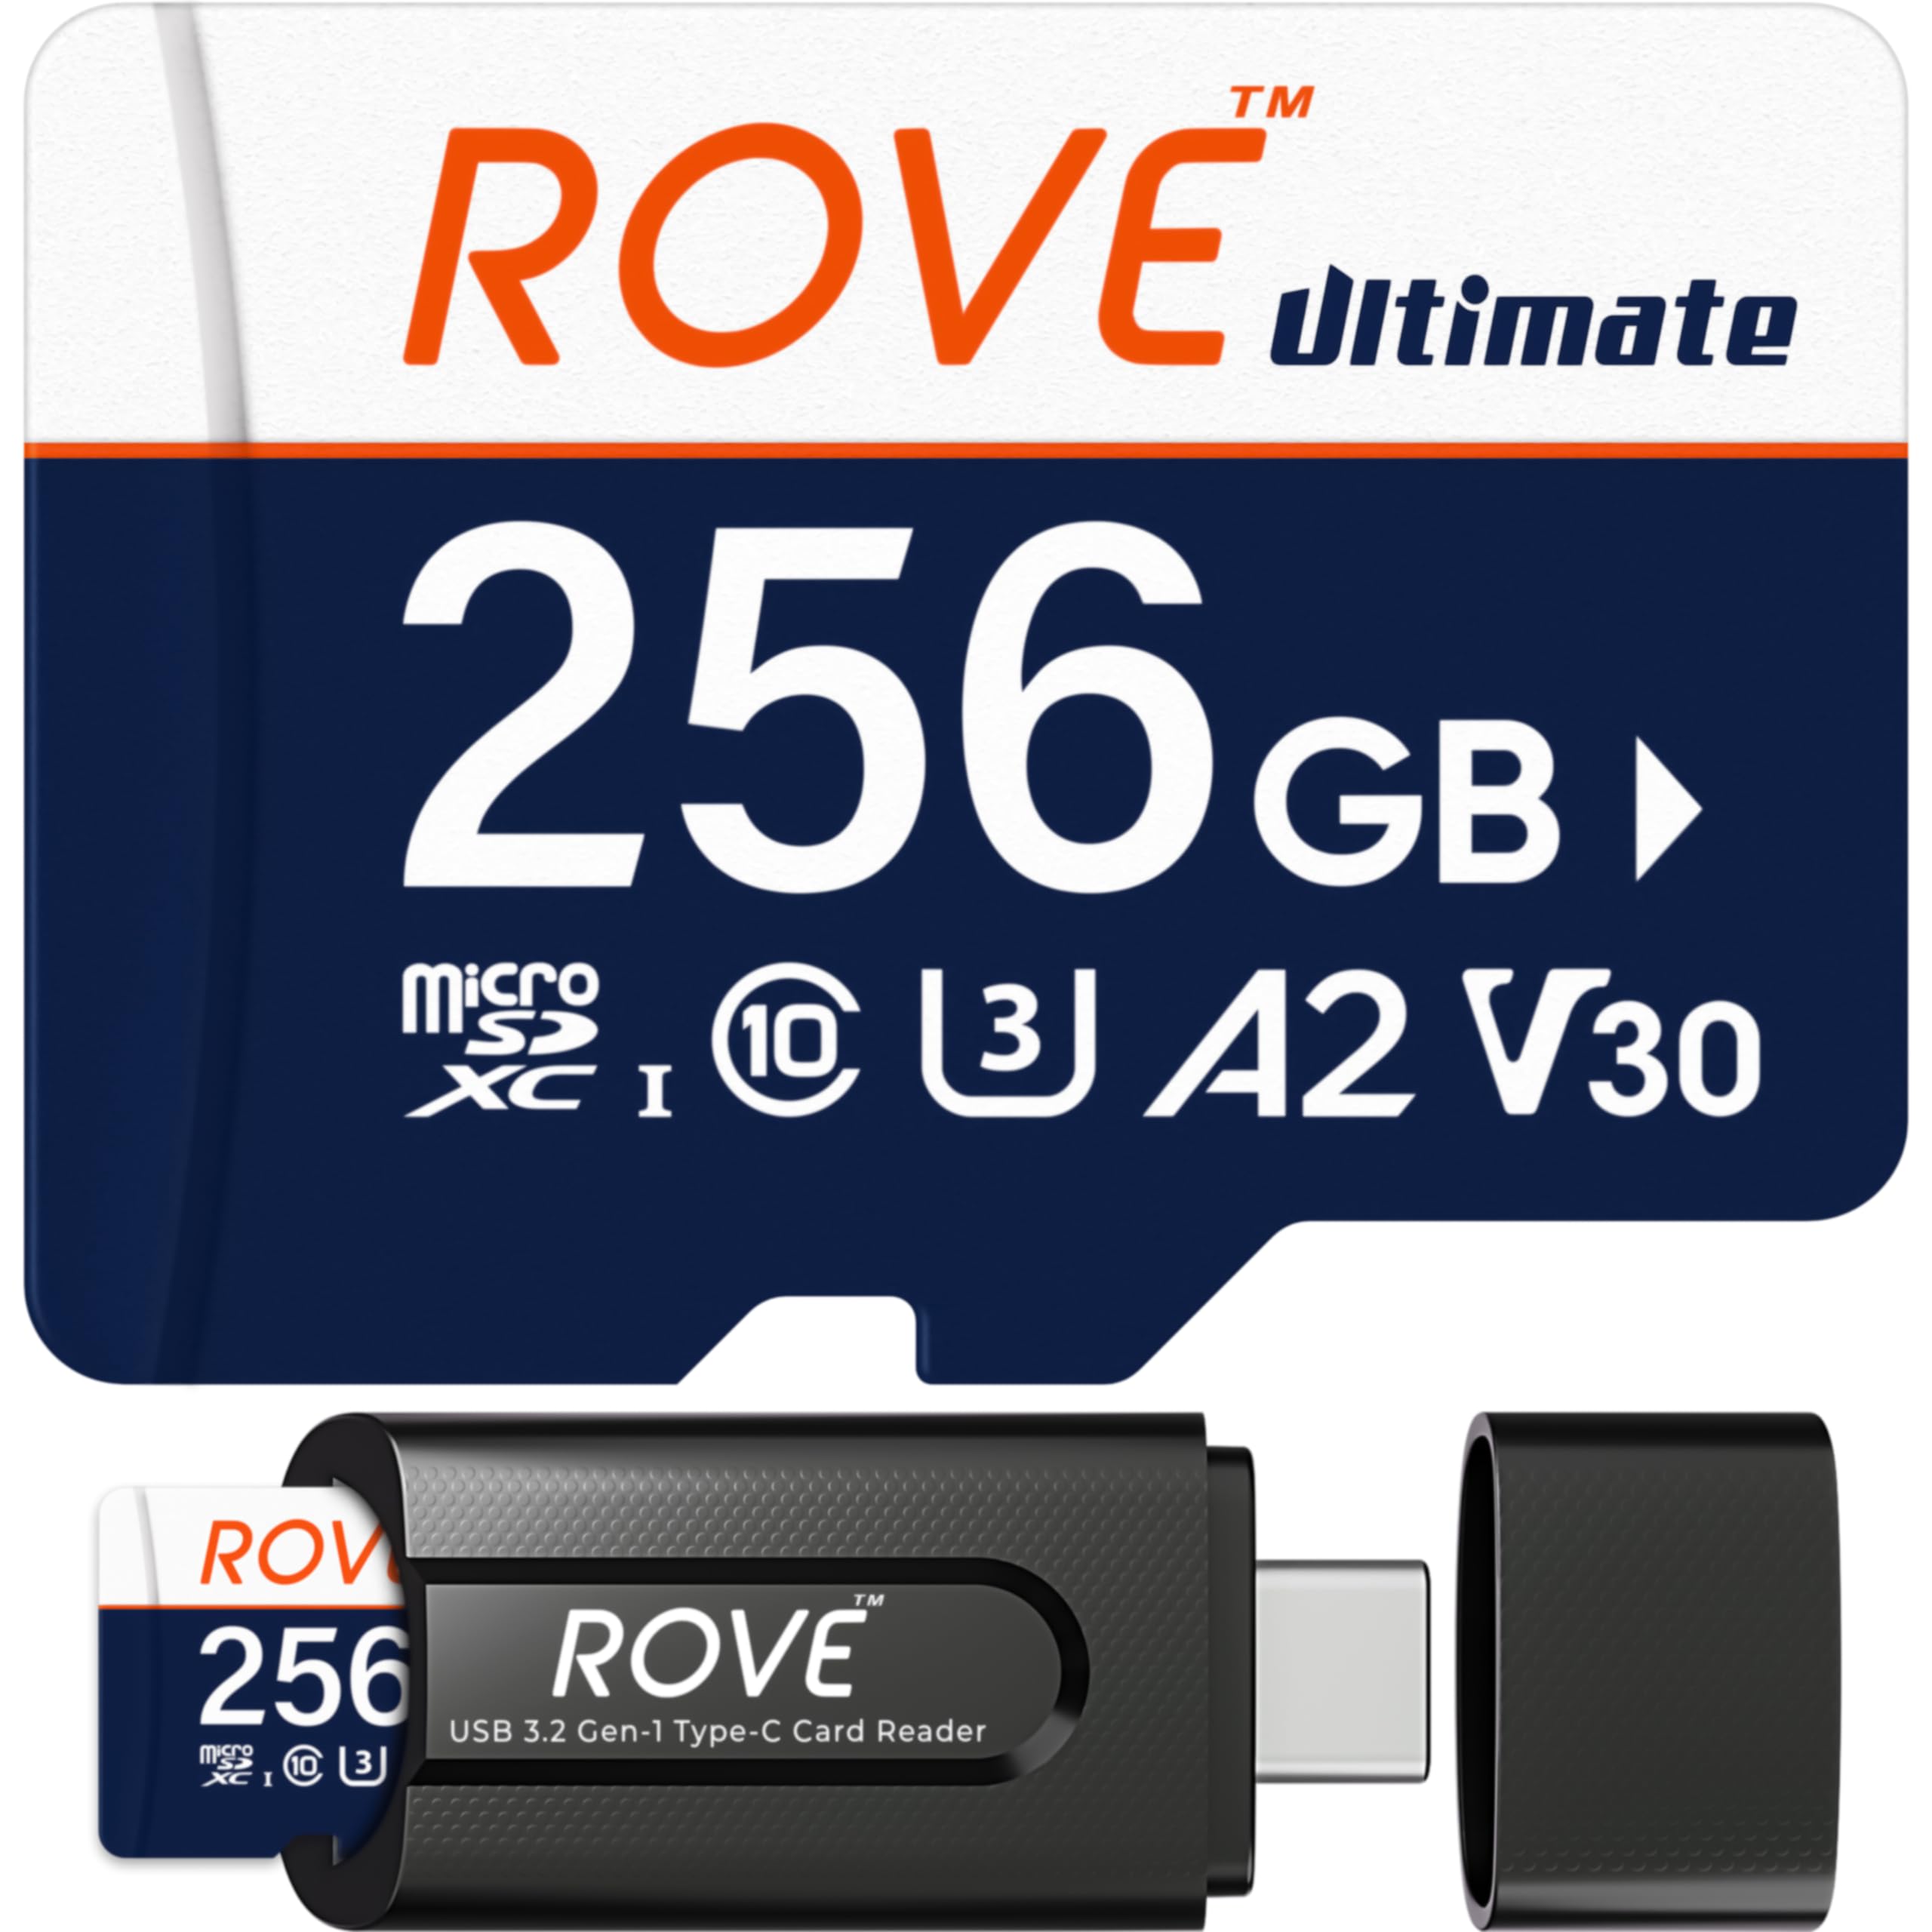 ROVE R2-4K PRO Dash Cam | 256GB Micro SD Card